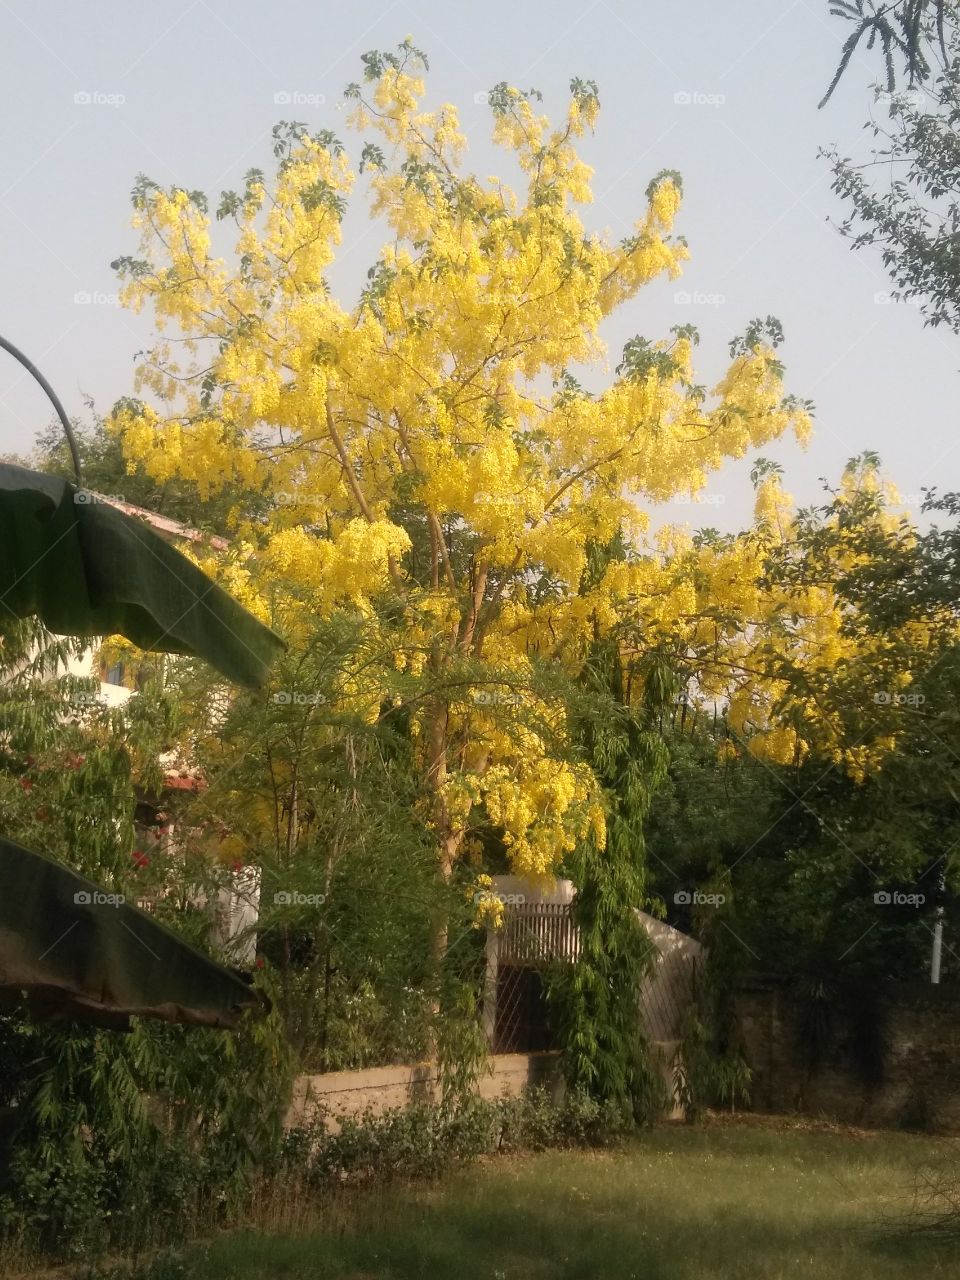 Gold mohar tree